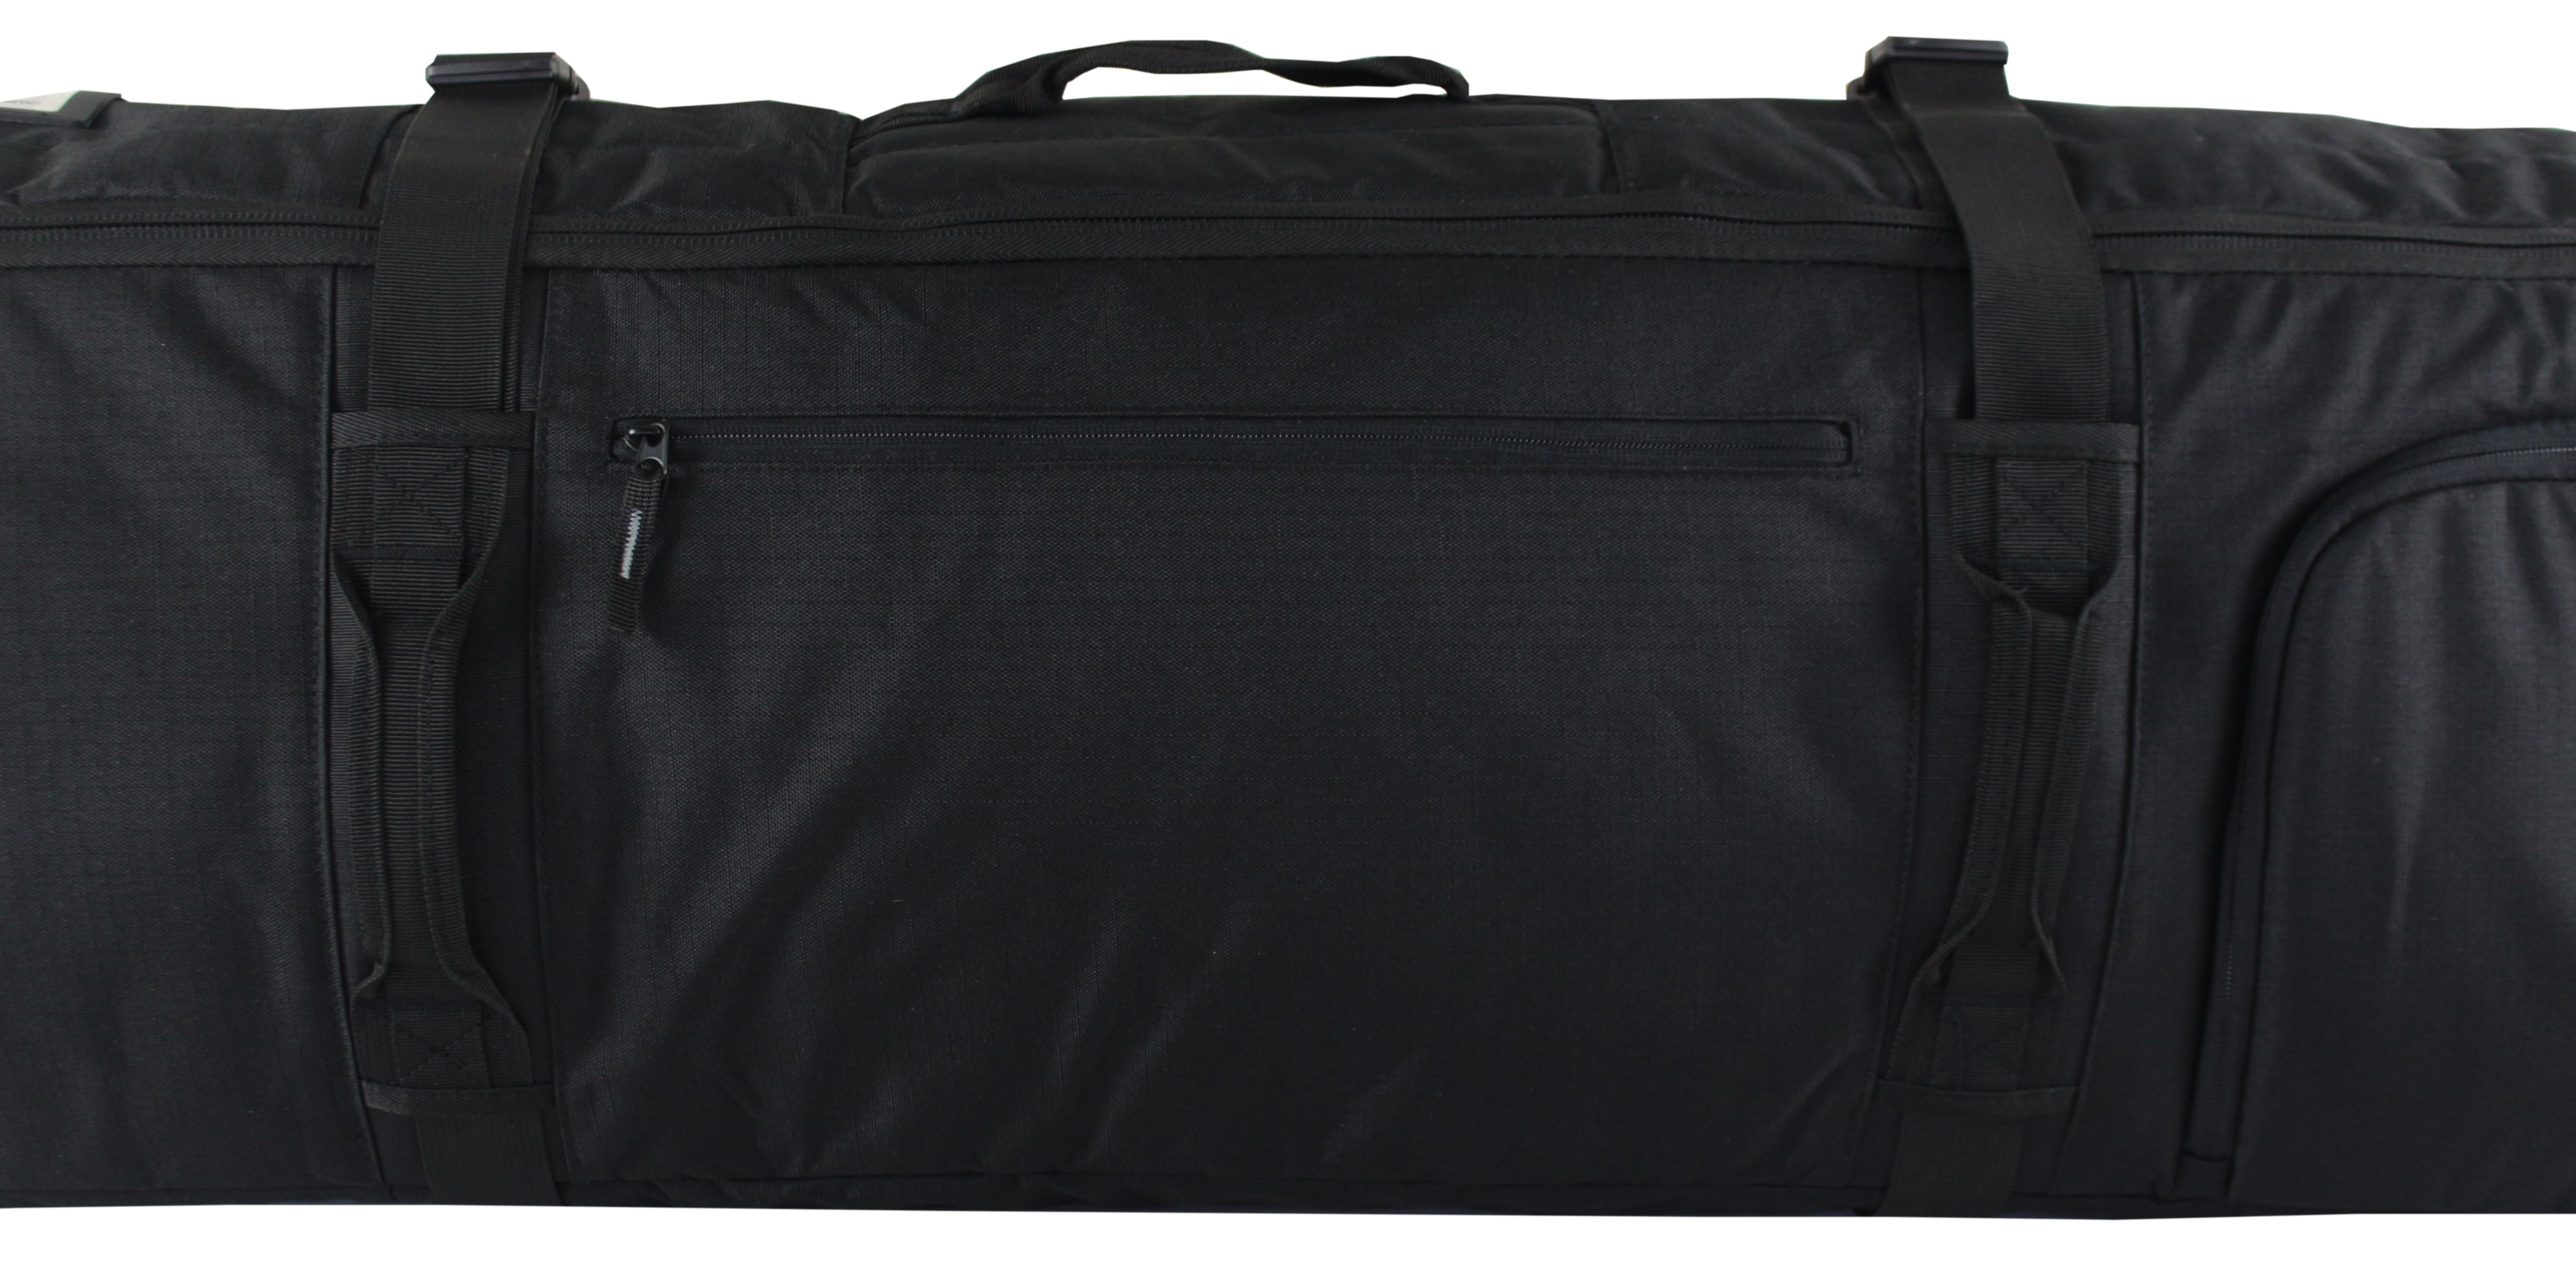 Buy Rothco Canvas Equipment Bag - 24 Inches at Ubuy India